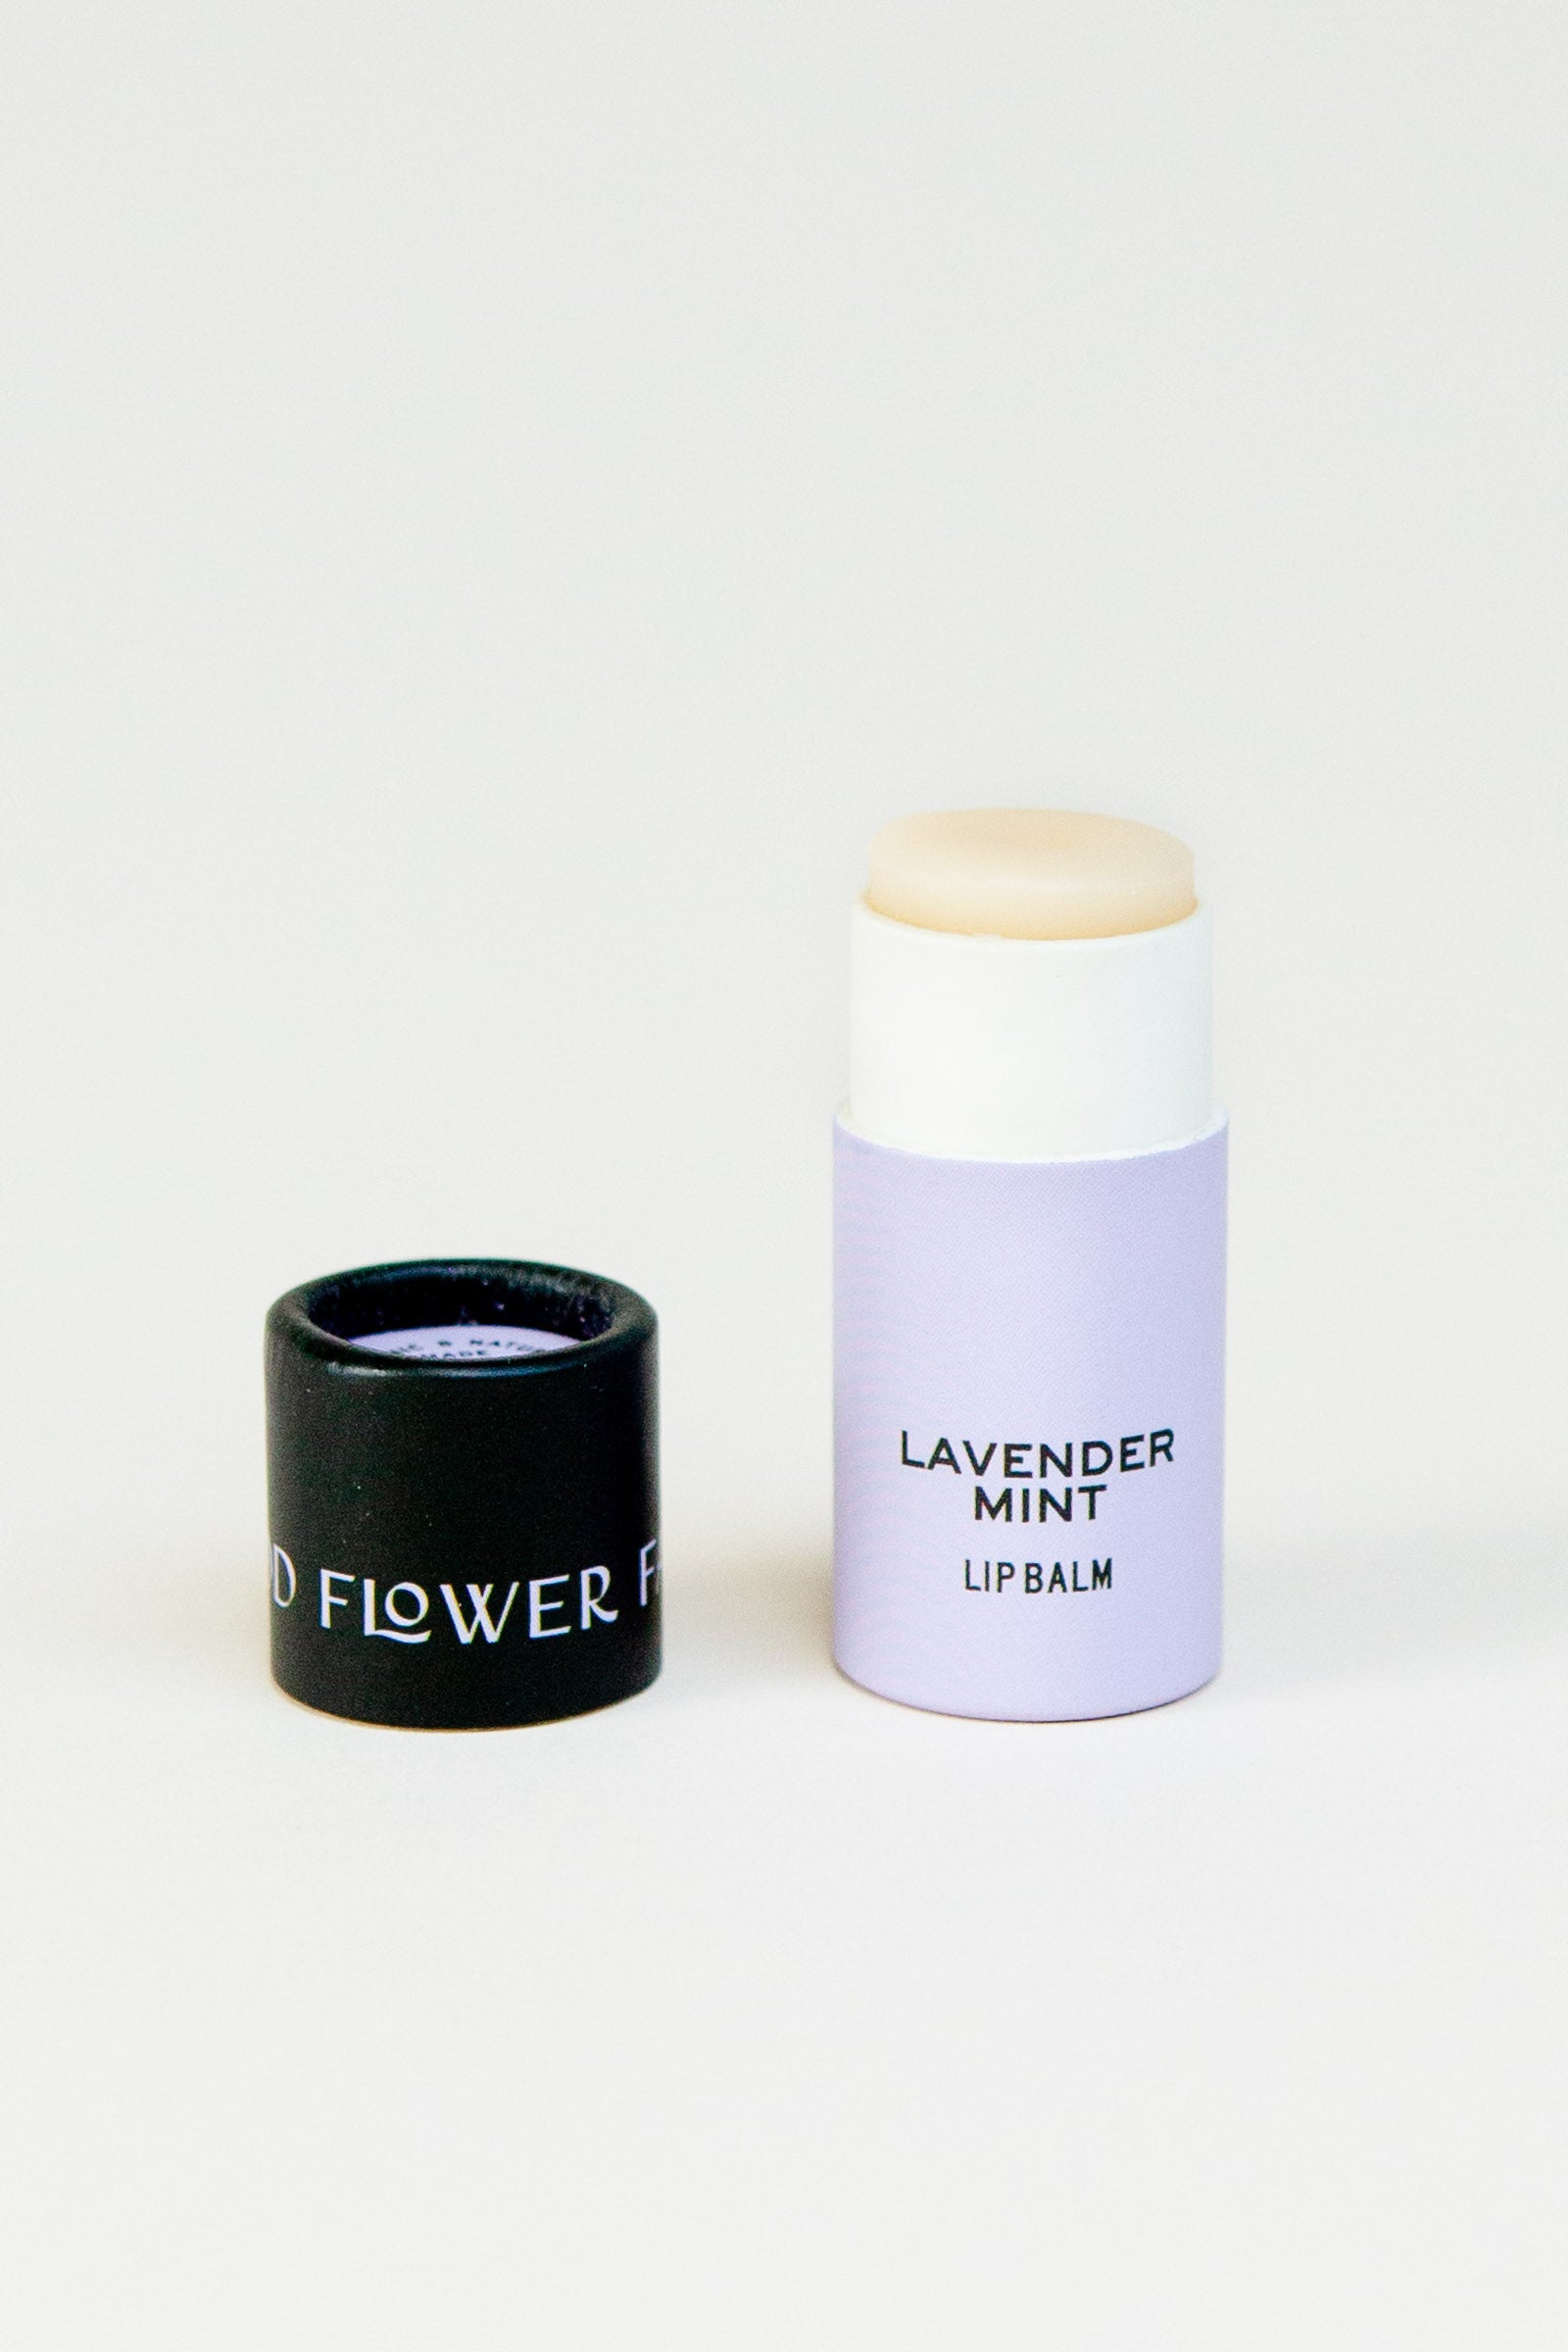 Organic lavender mint lip balm in biodegradable plastic-free tube by Good Flower Farm